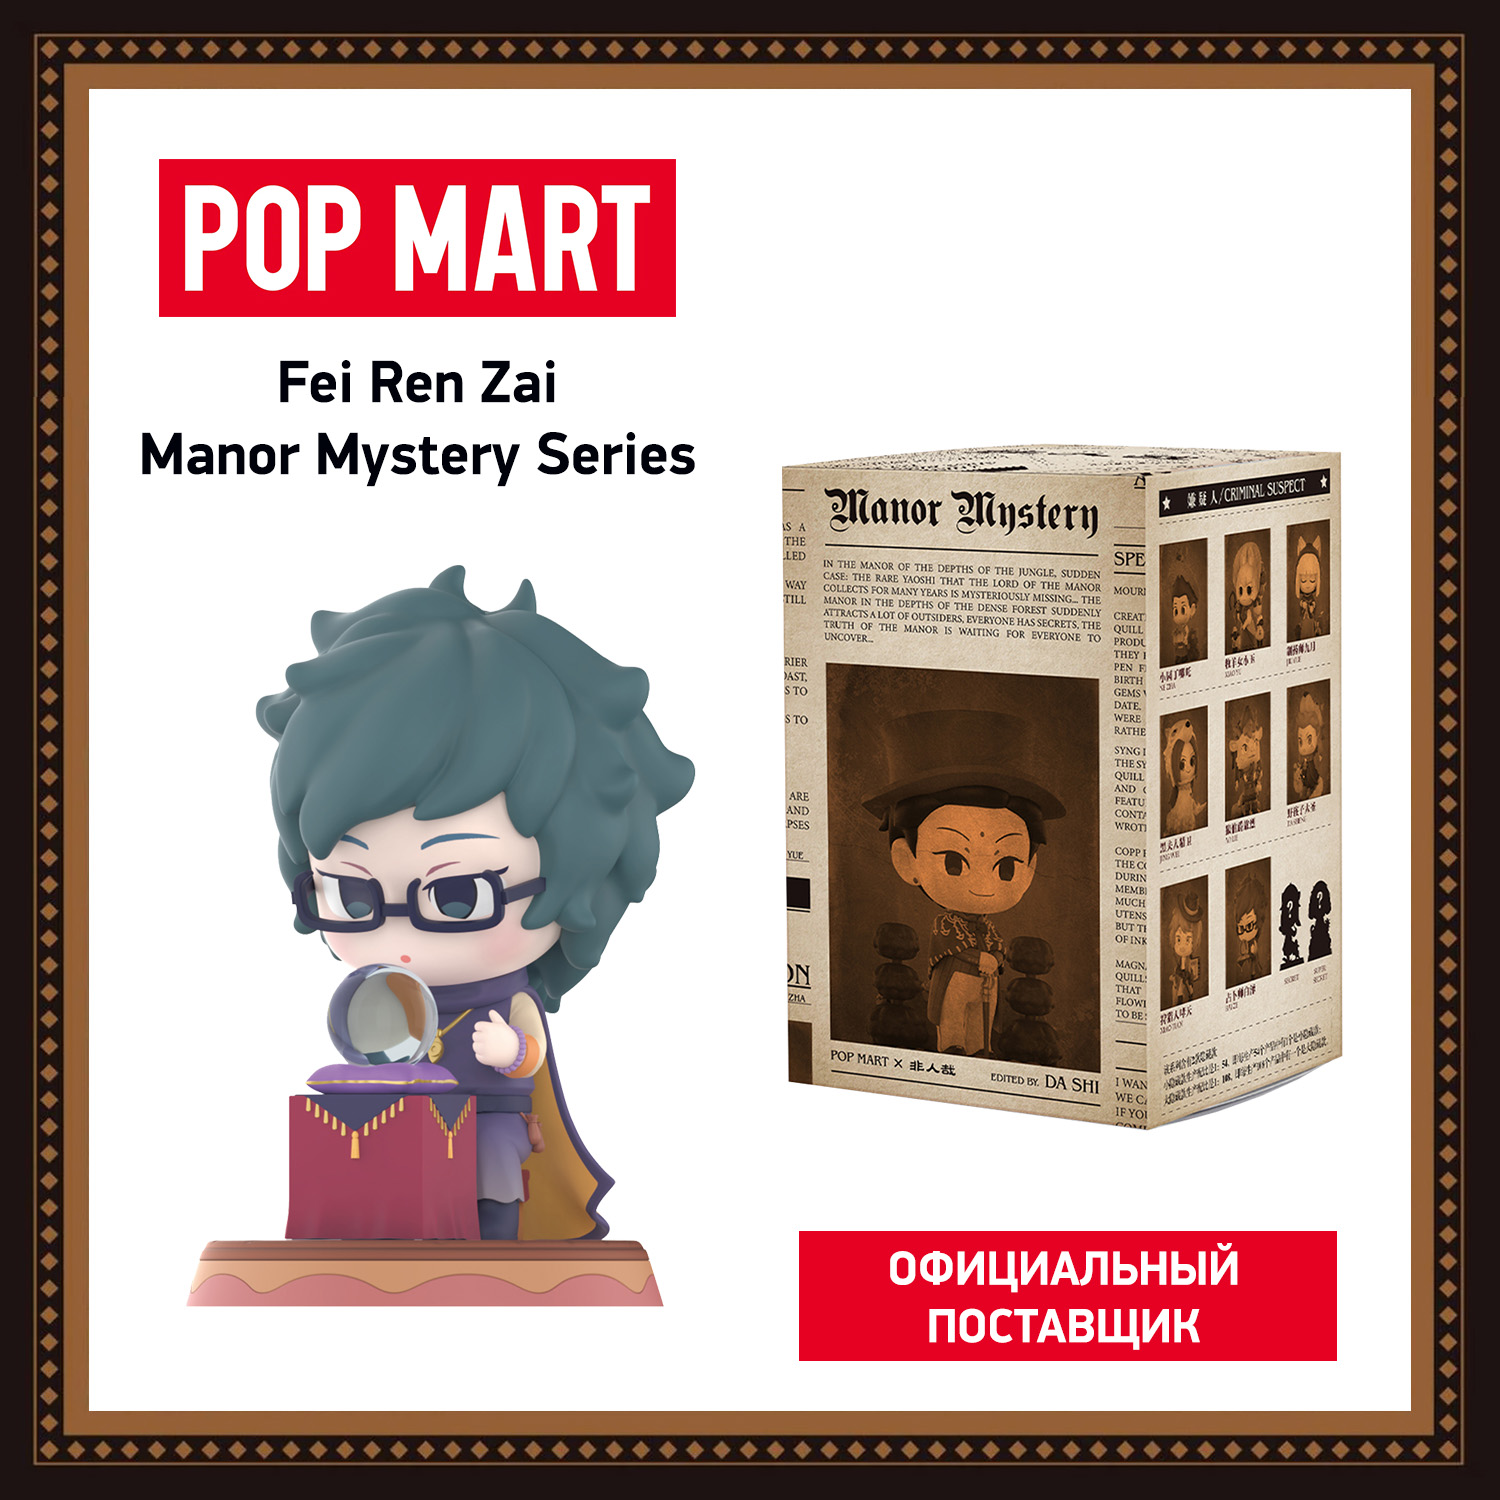 Коллекционная фигурка Pop Mart Fei Ren Zai Manor Mystery фигурка pop mart molly magic mint car 15см pm63208